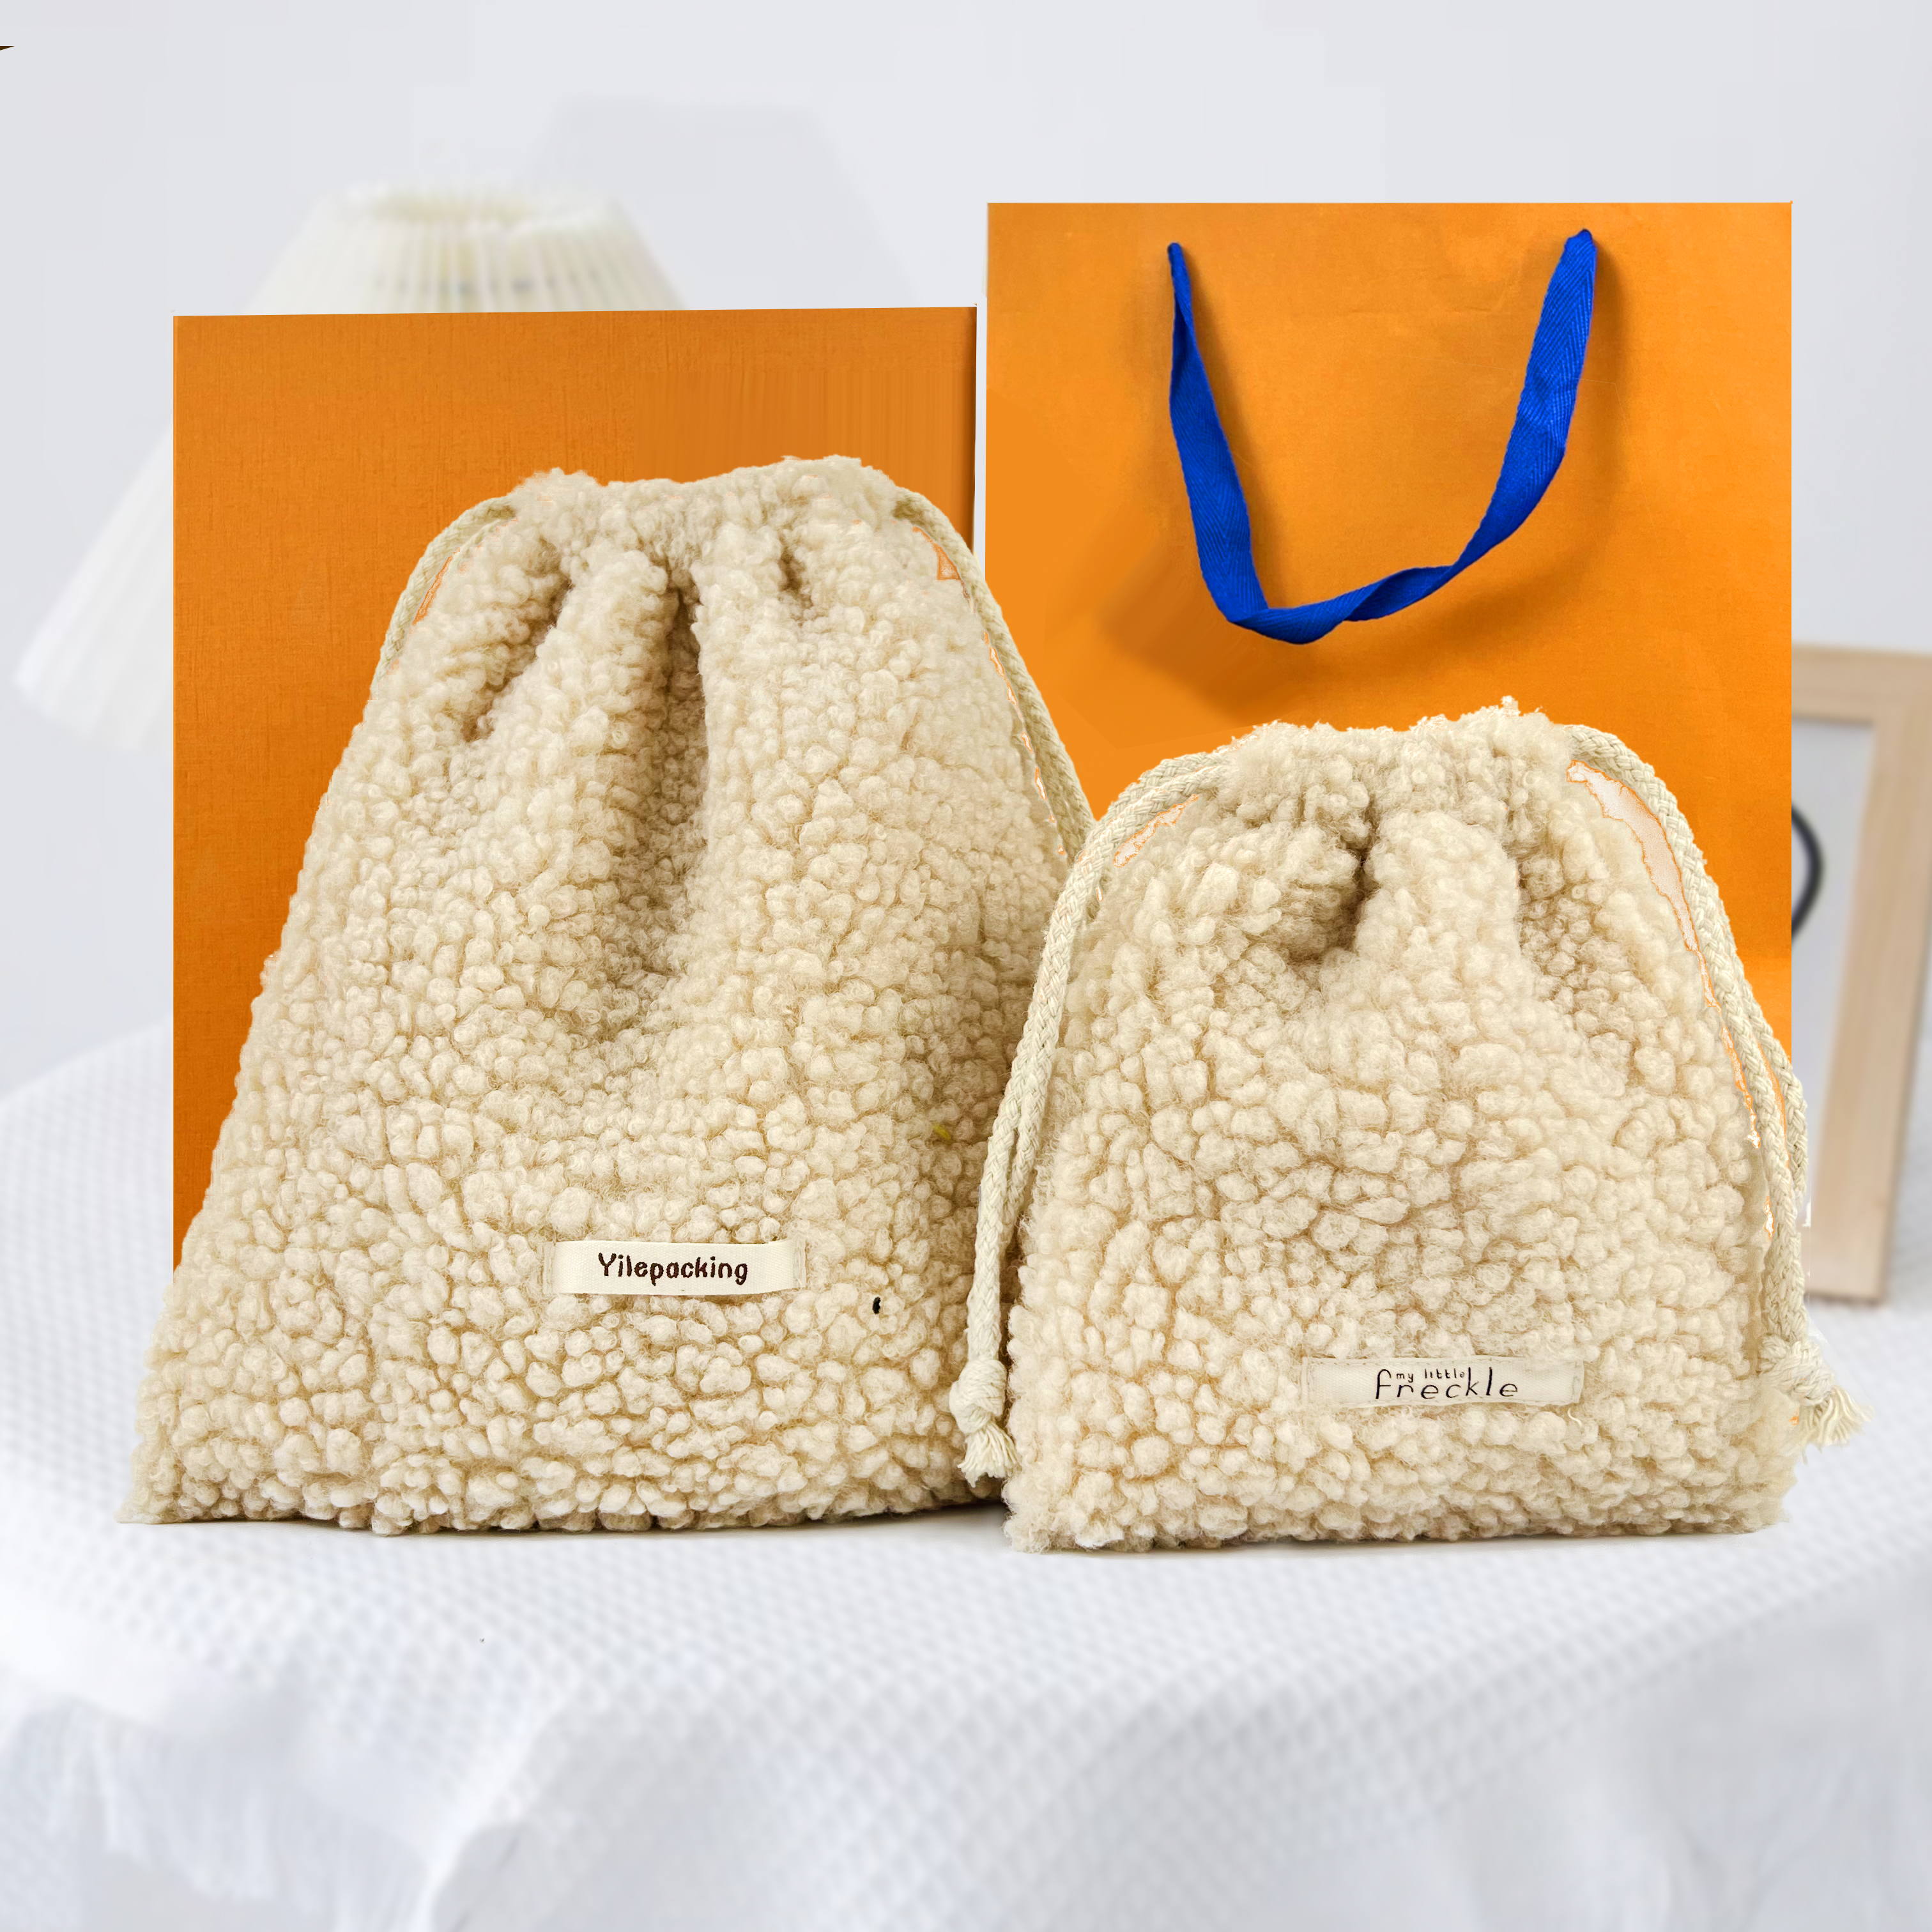 dust bags for handbags,shoe dust bag,RPET dust bag